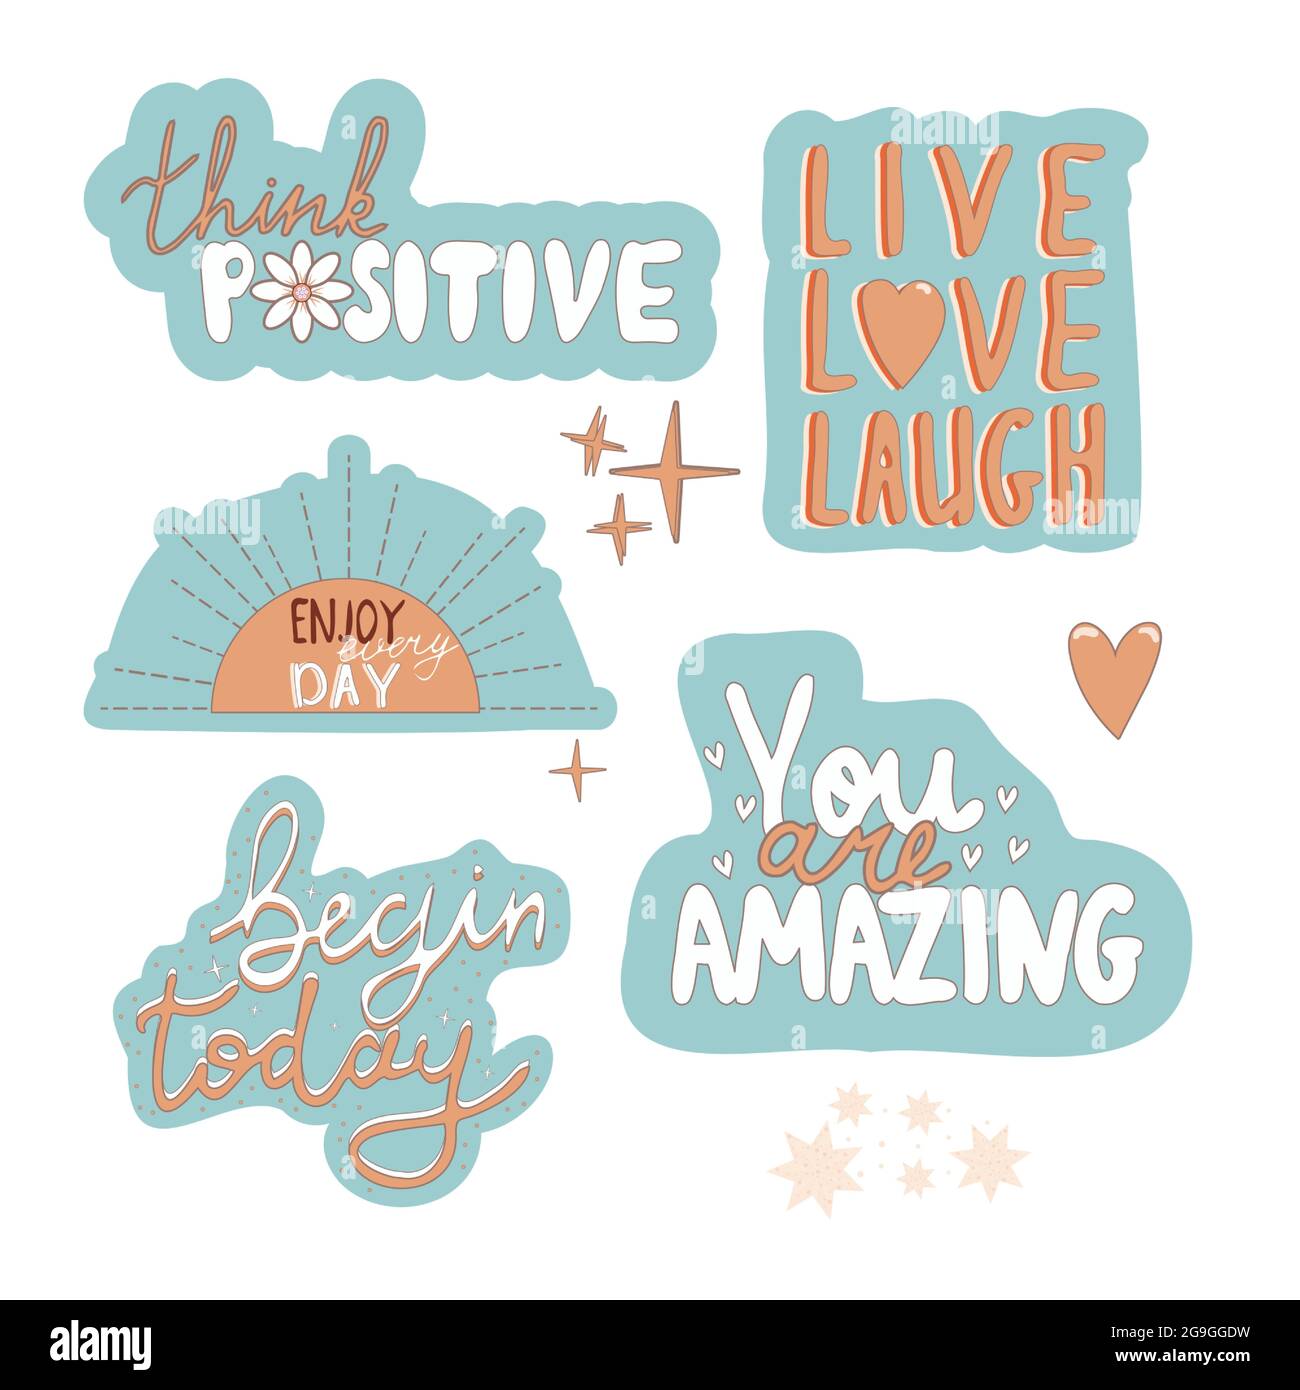 Hello Beautiful Stickers, Motivational Stickers, Inspirational Sticker –  Sticker Art Designs